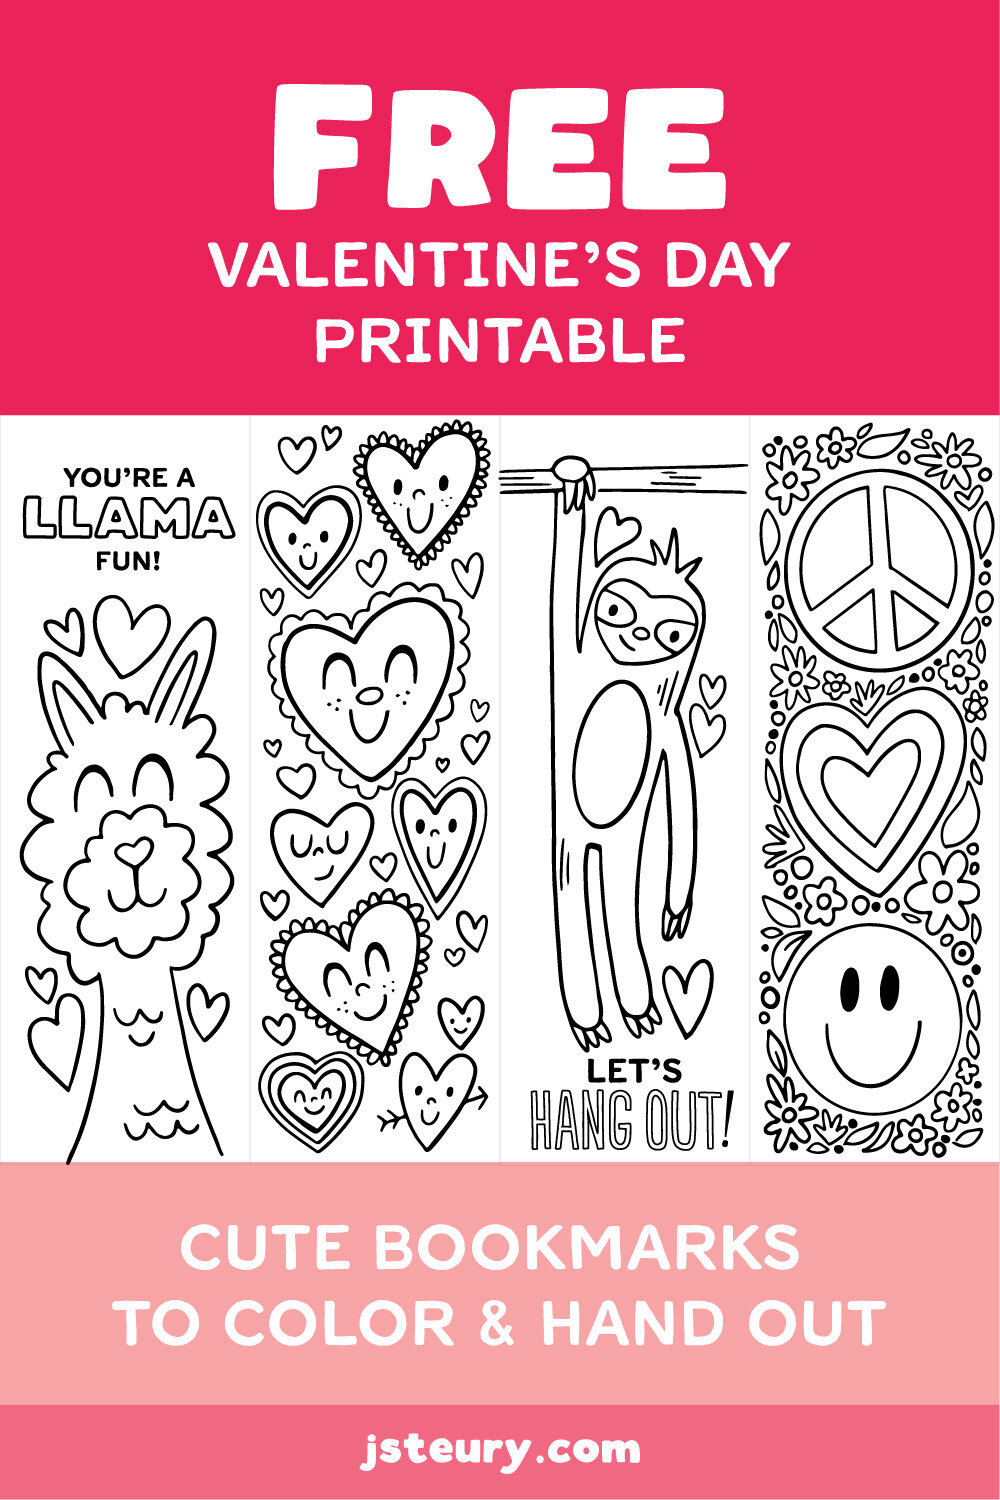 free-printable-bookmarks-valentine-s-day-free-printable-templates